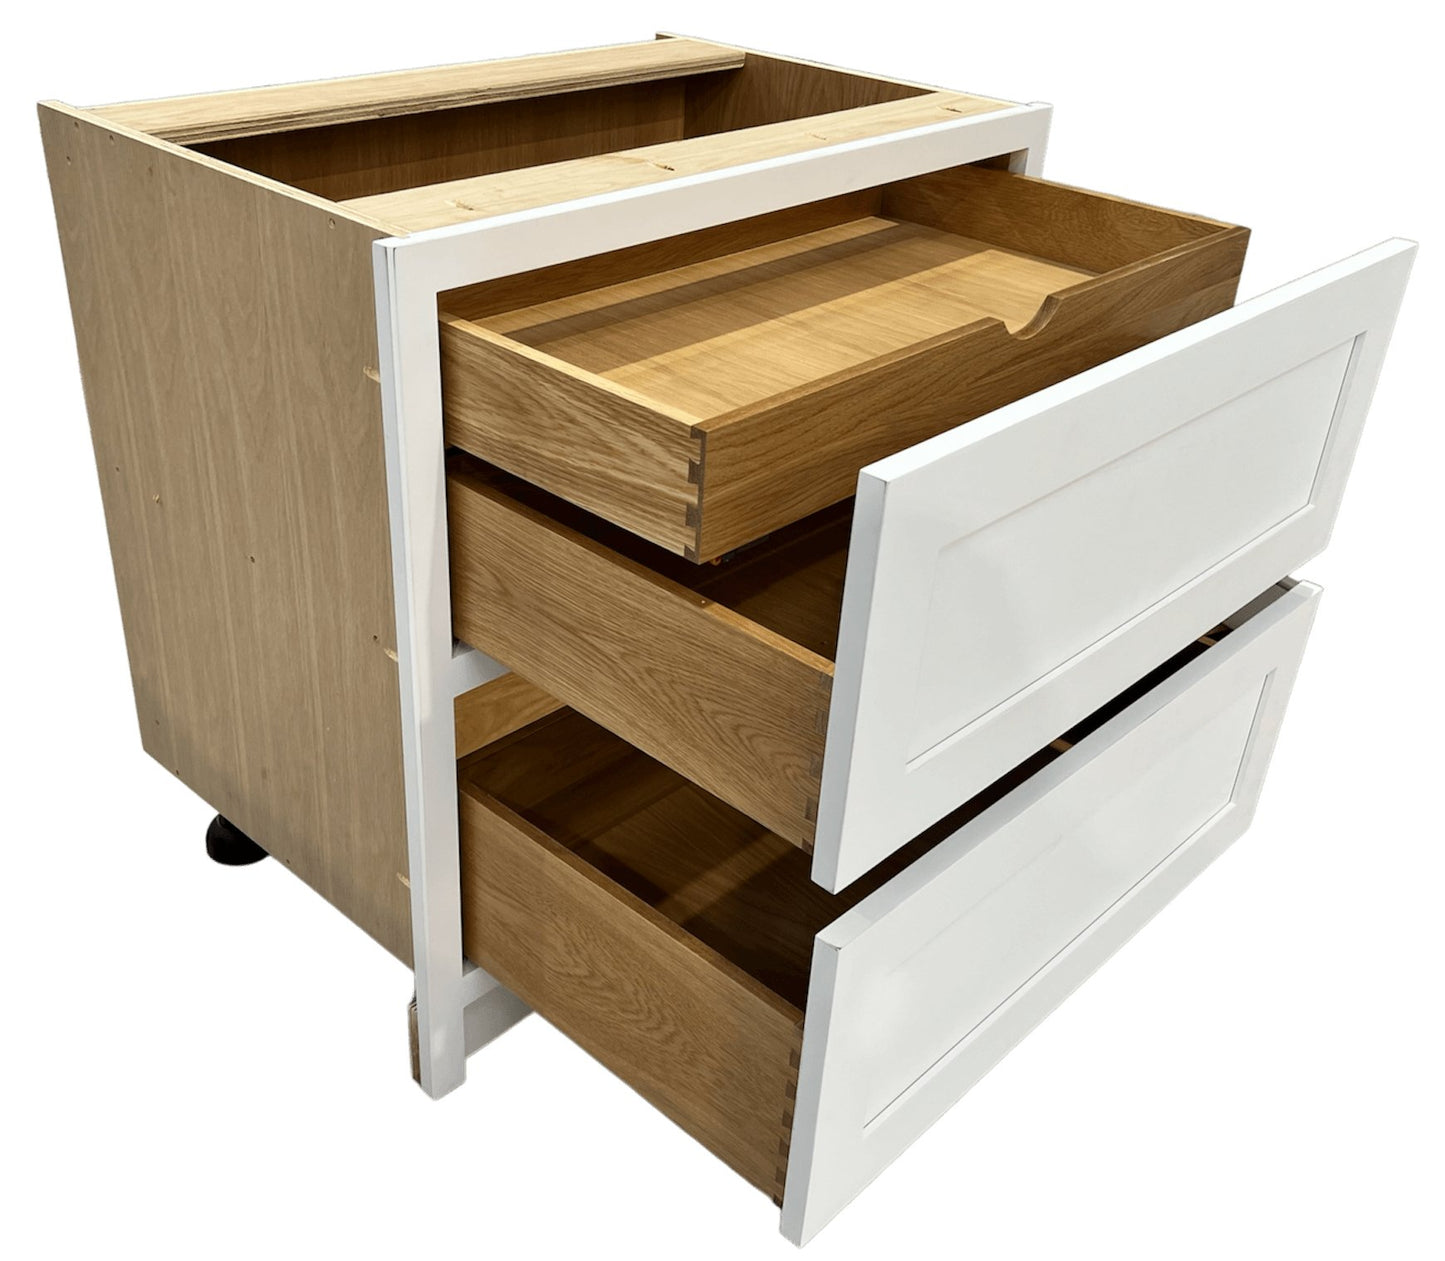 BD2 800 - 800mm 2 drawer base plus a hidden internal drawer - Classic Kitchens Direct